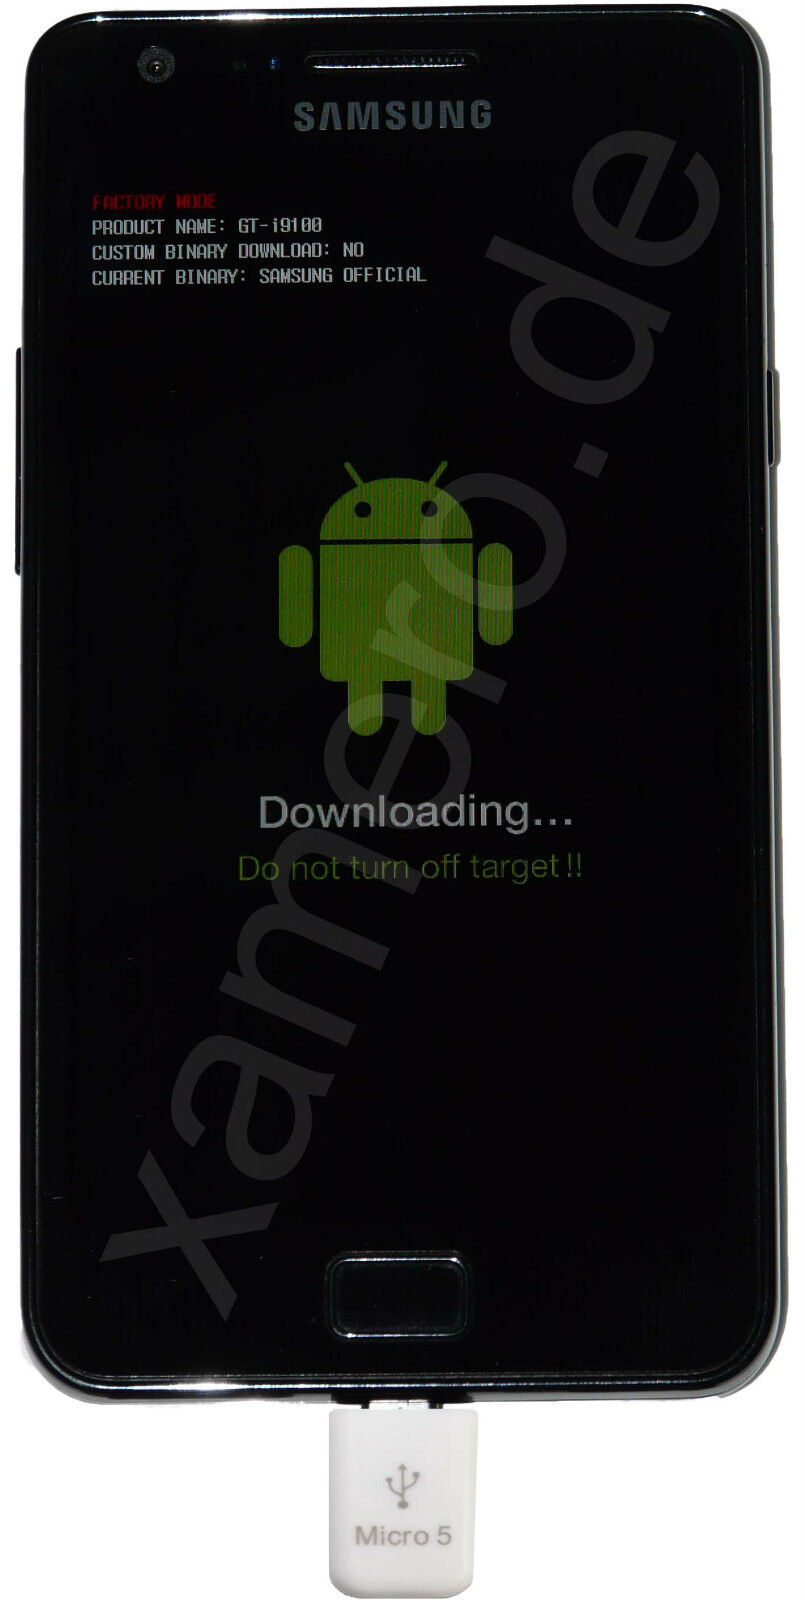 Samsung Galaxy S7 S6 S5 S4 S3 Jig Tool Fix Download Mode reparieren USB Unbrick